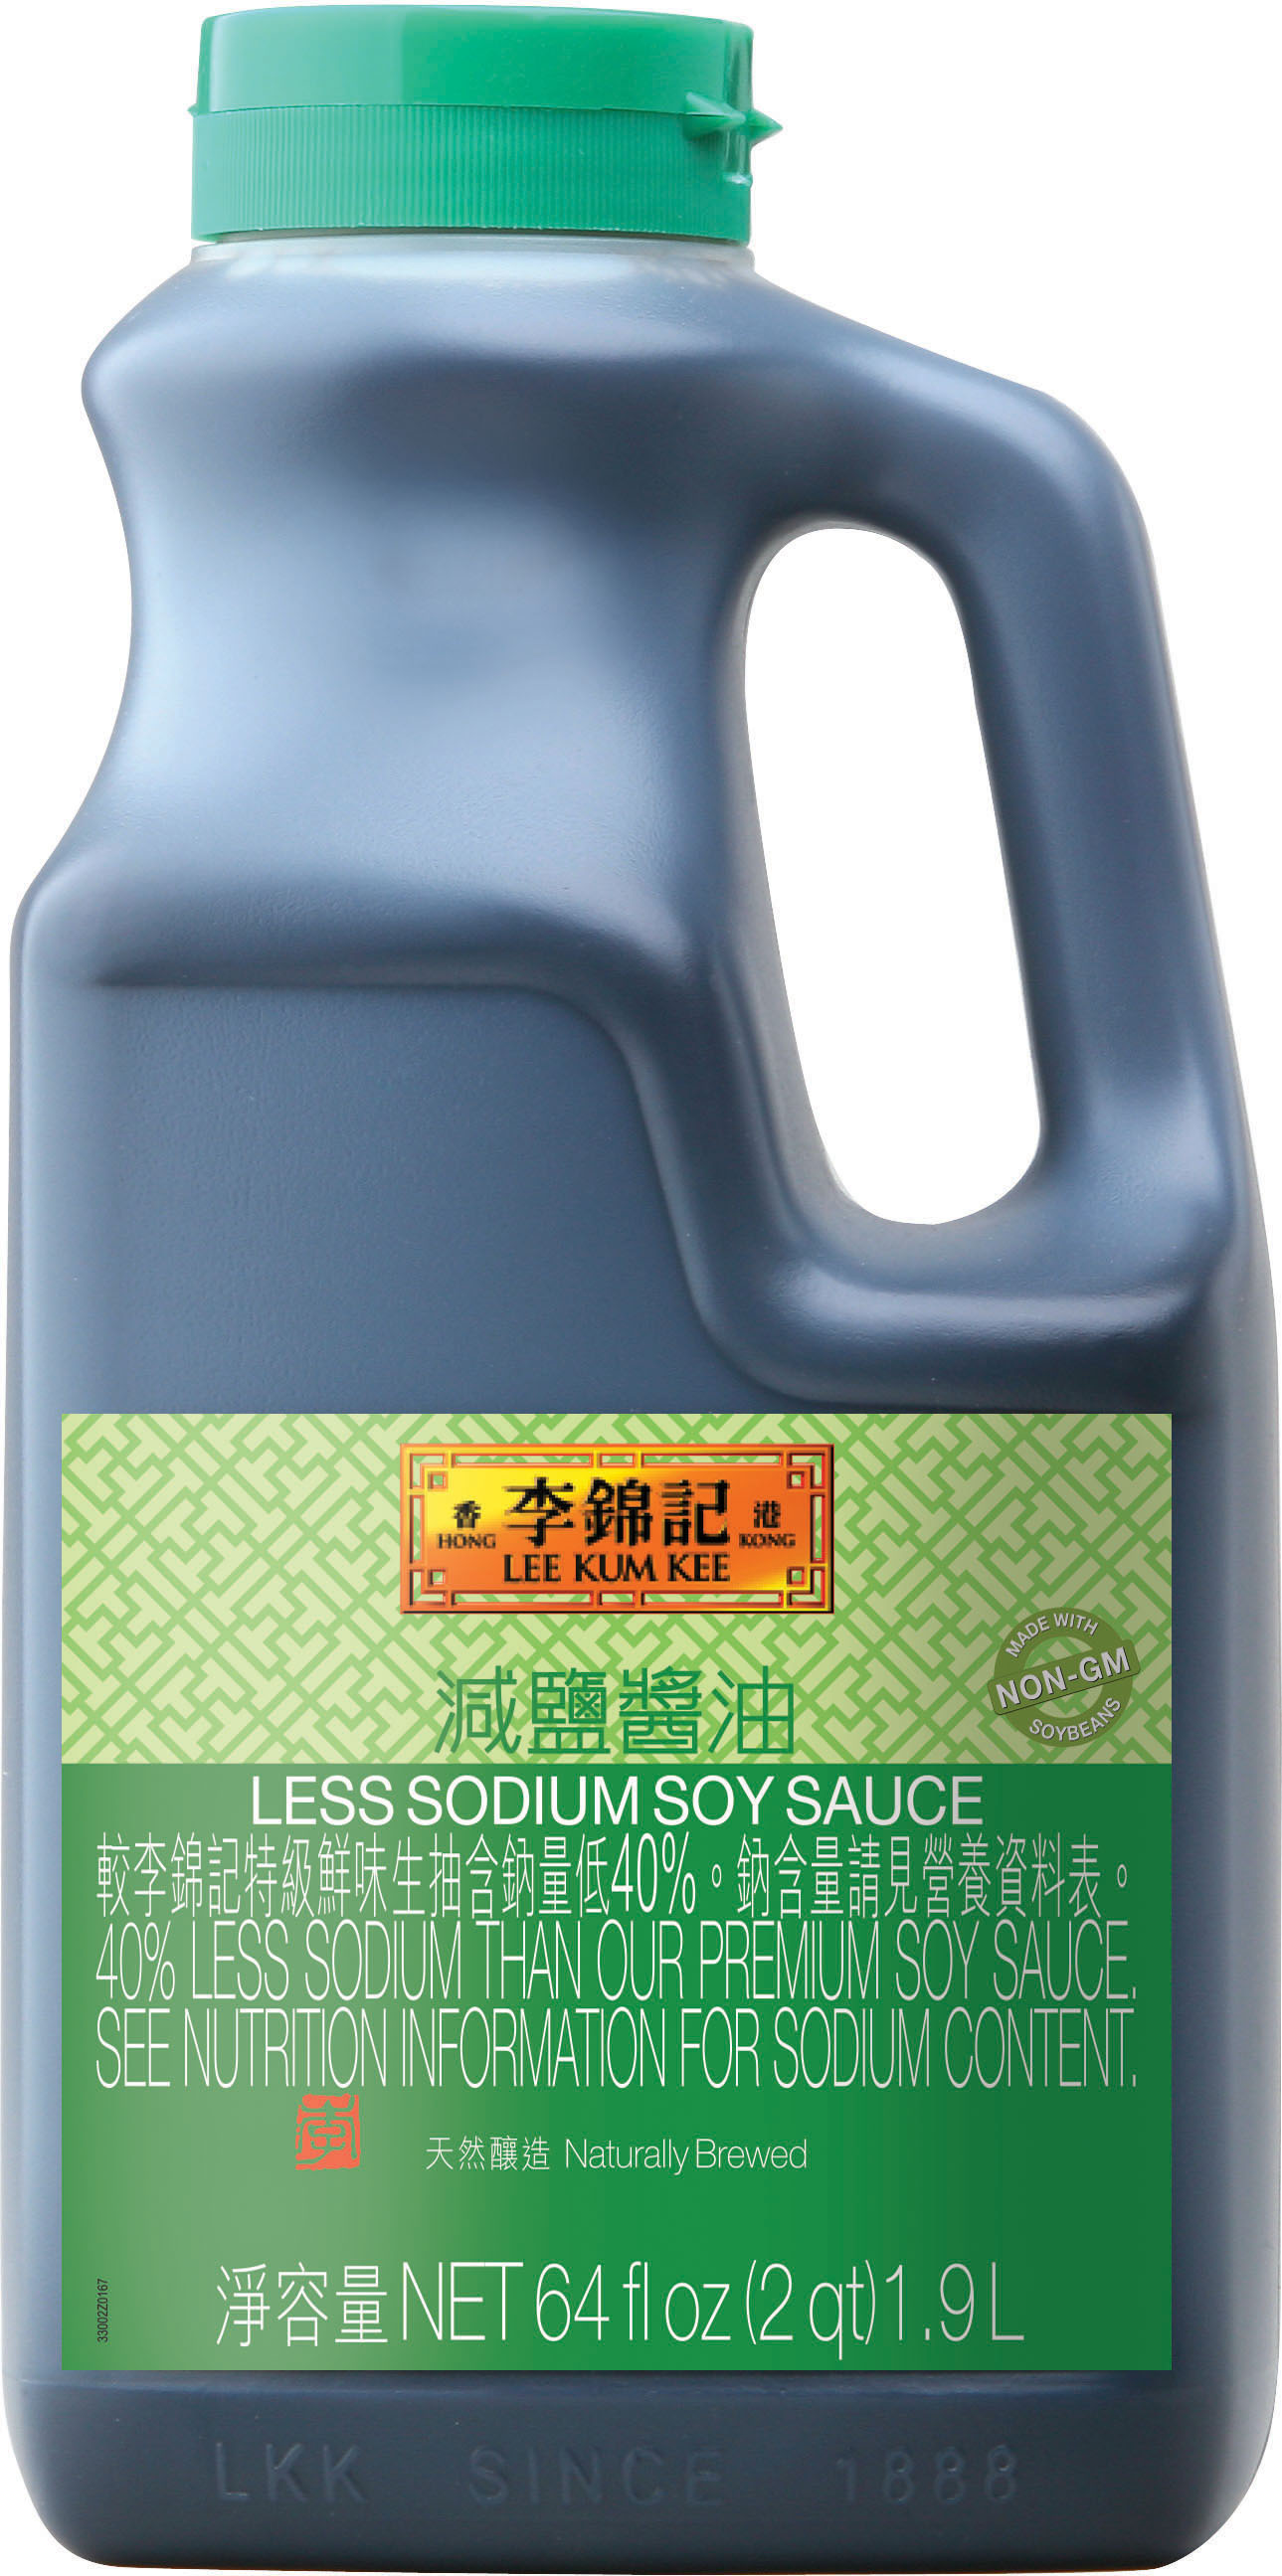 Less Sodium Soy Sauce 64 fl oz, 1.9L